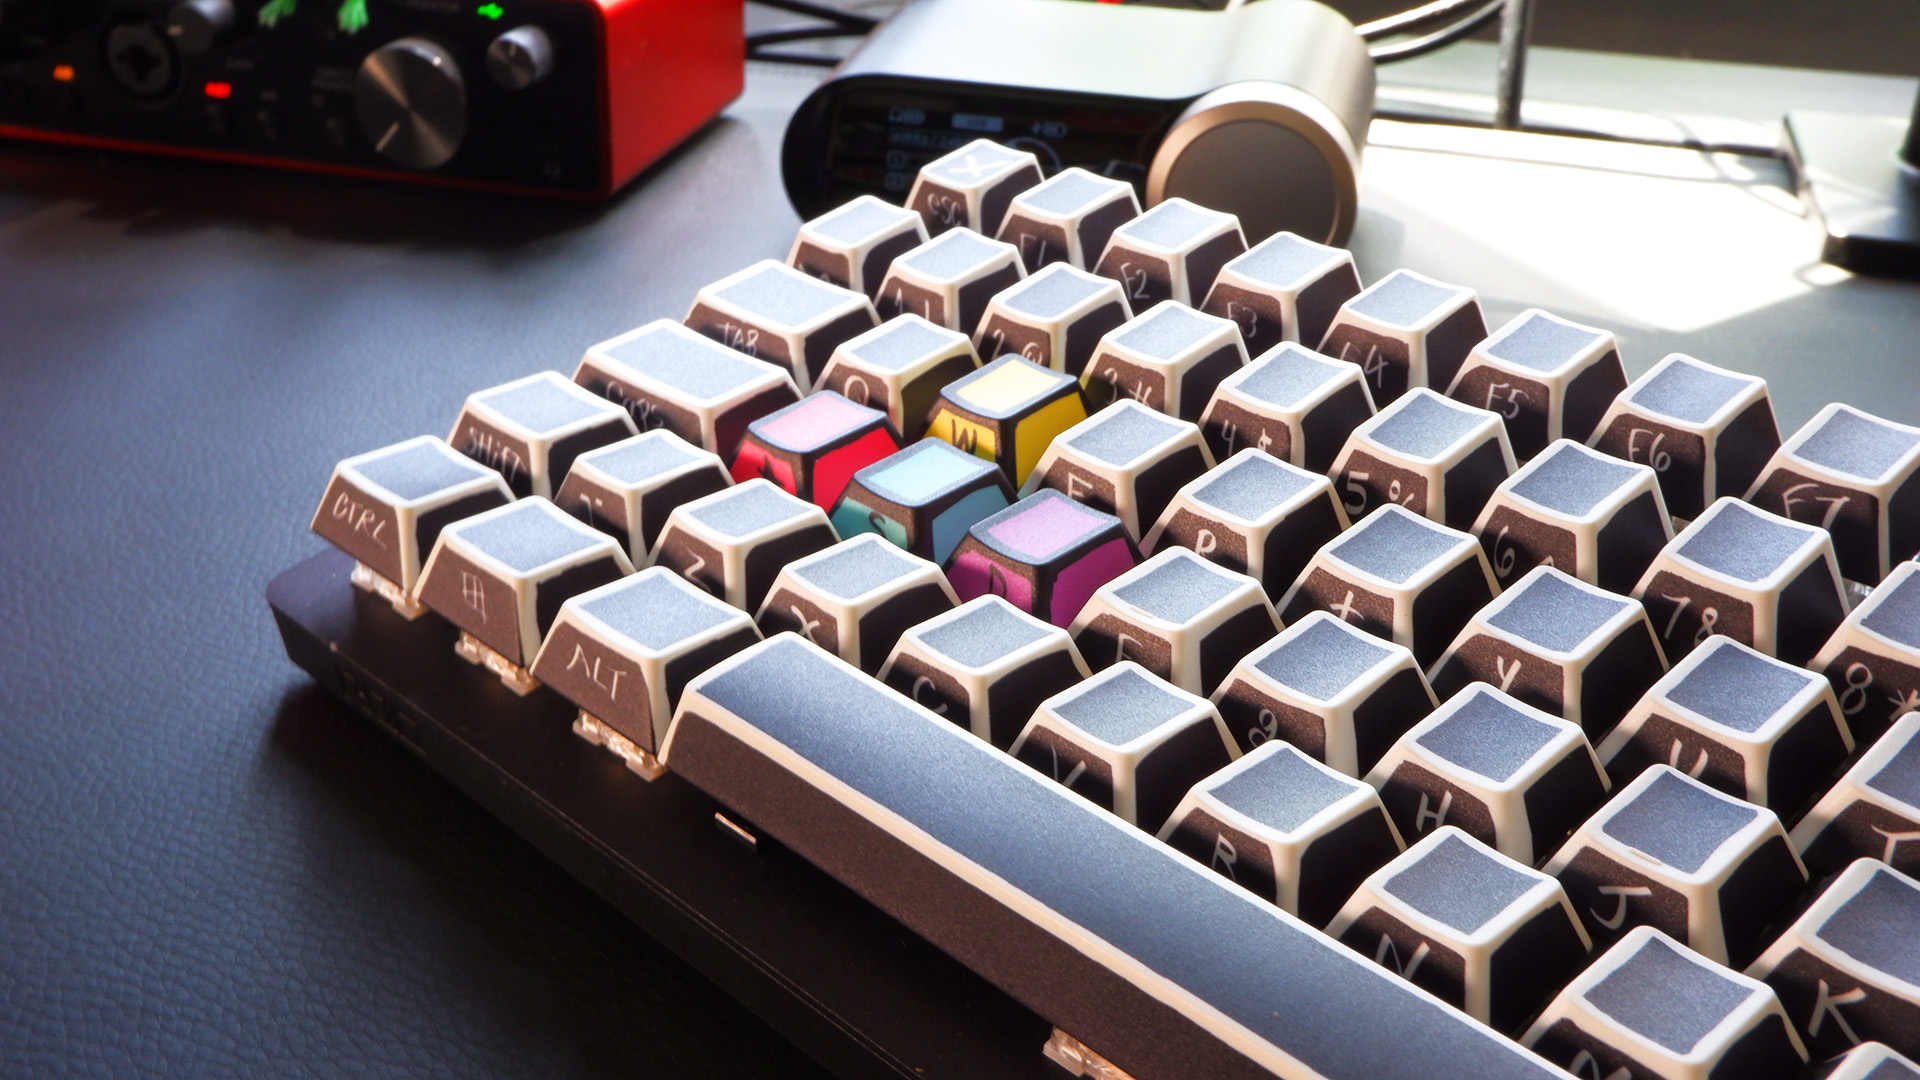 Glorious KeyCapsules keycap set, GPBT Sketch, on a gaming keyboard.